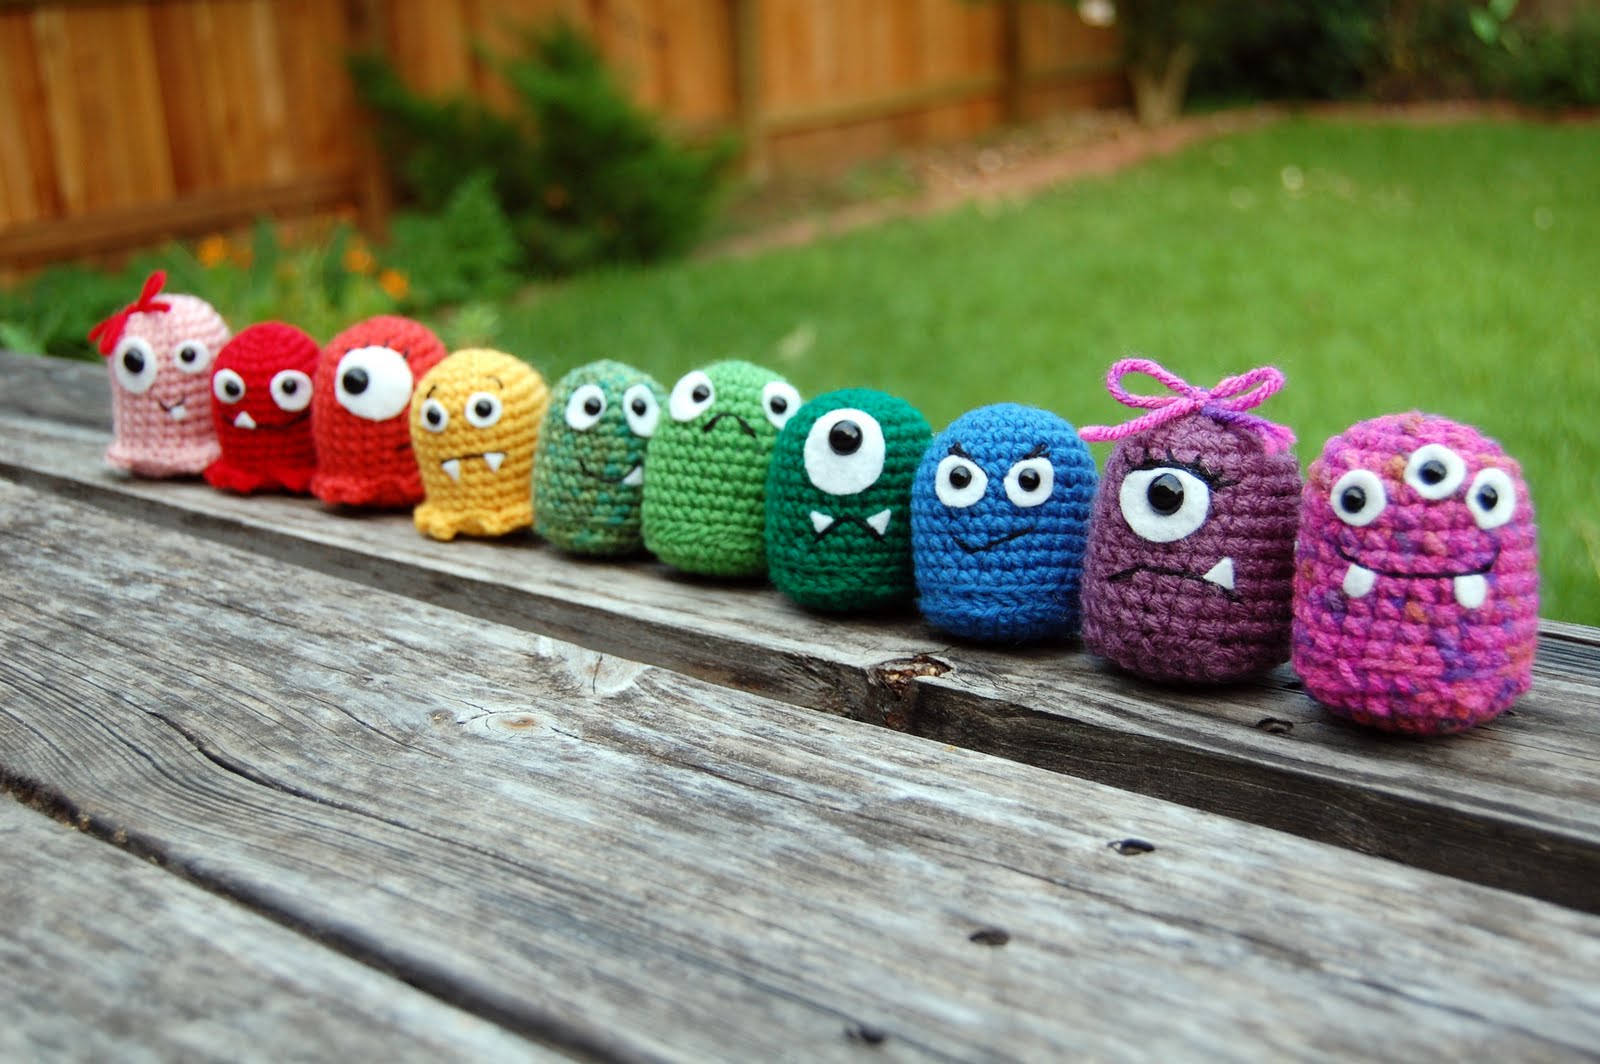 Amigurimi Stuffy Gift for Kids Baby Alien Crochet Stuffed Animal